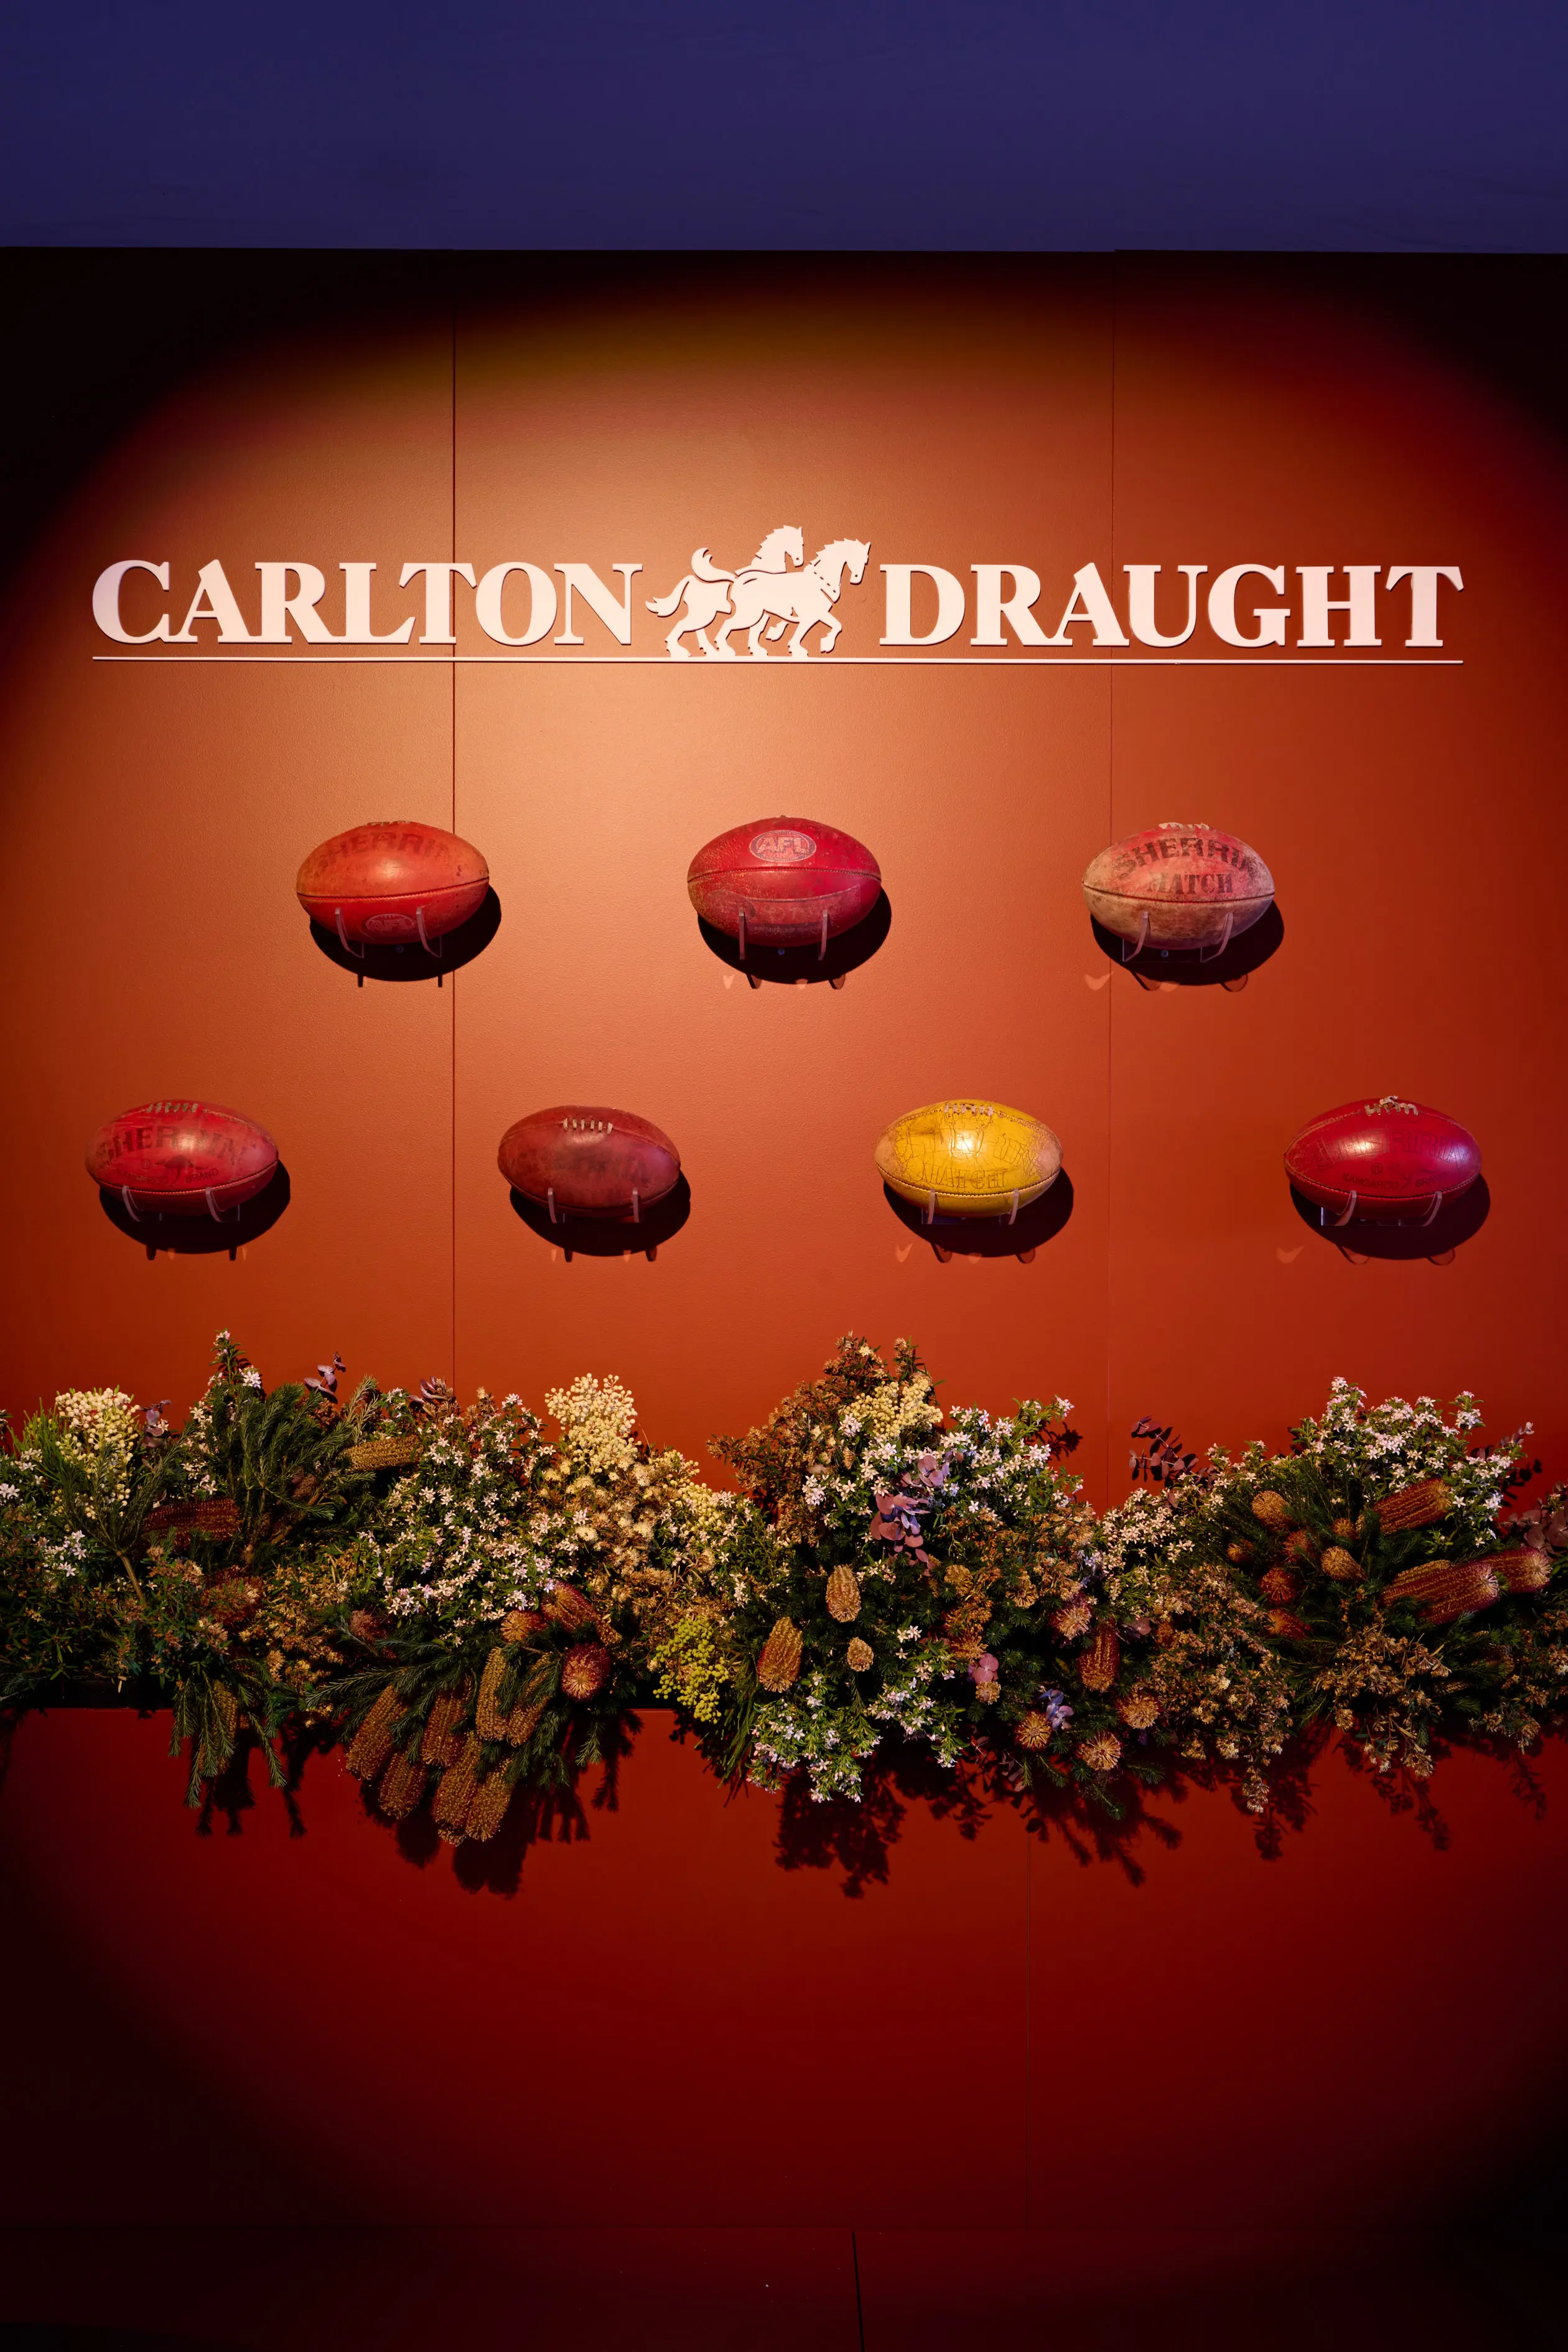 Carlton Draught at September Club - brand activation, event production - MCG, Melbourne, Australia